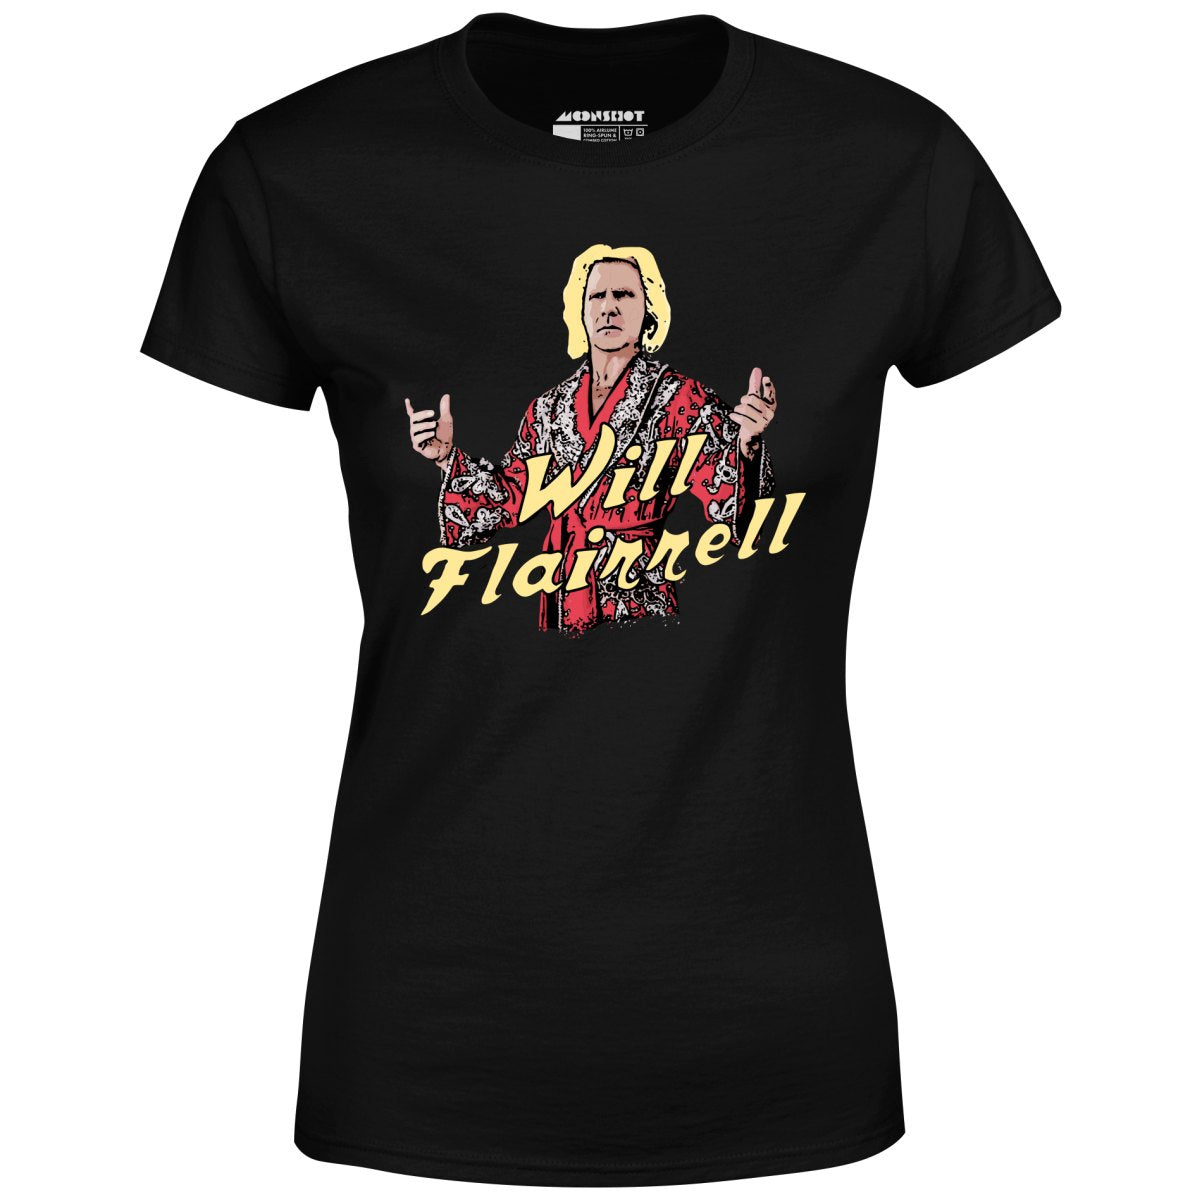 Will Flairrell - Ric Flair Will Ferrell Mashup - Women's T-Shirt